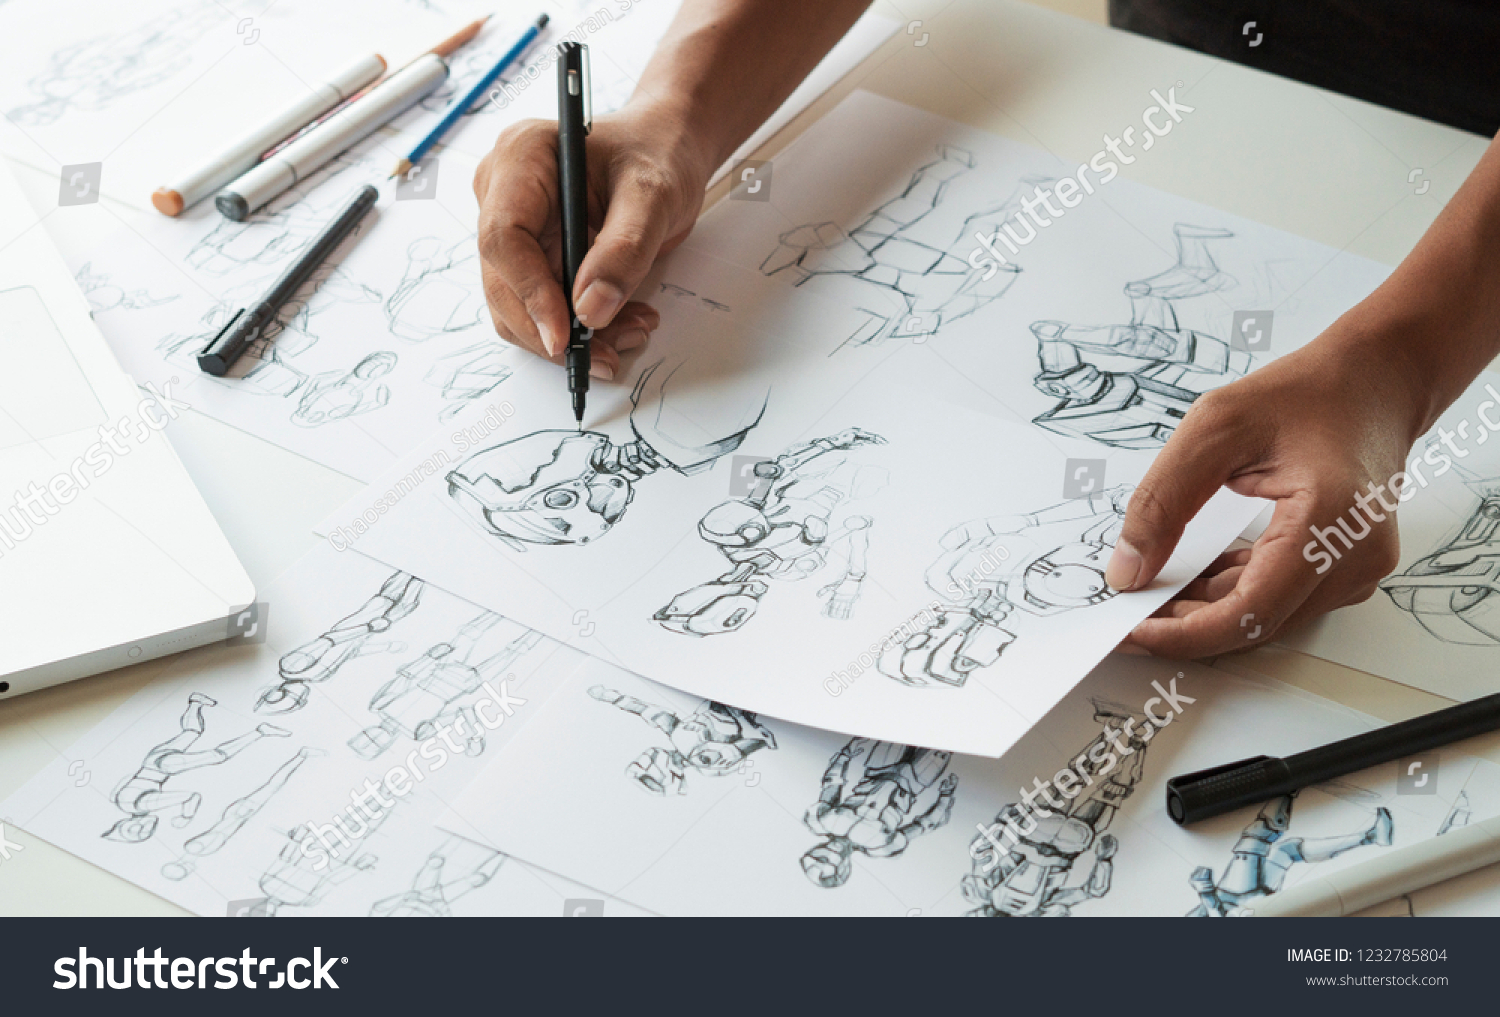 Animator designer Development designing drawing sketching development creating graphic pose characters sci-fi robot Cartoon illustration animation video game film production , animation design studio. #1232785804